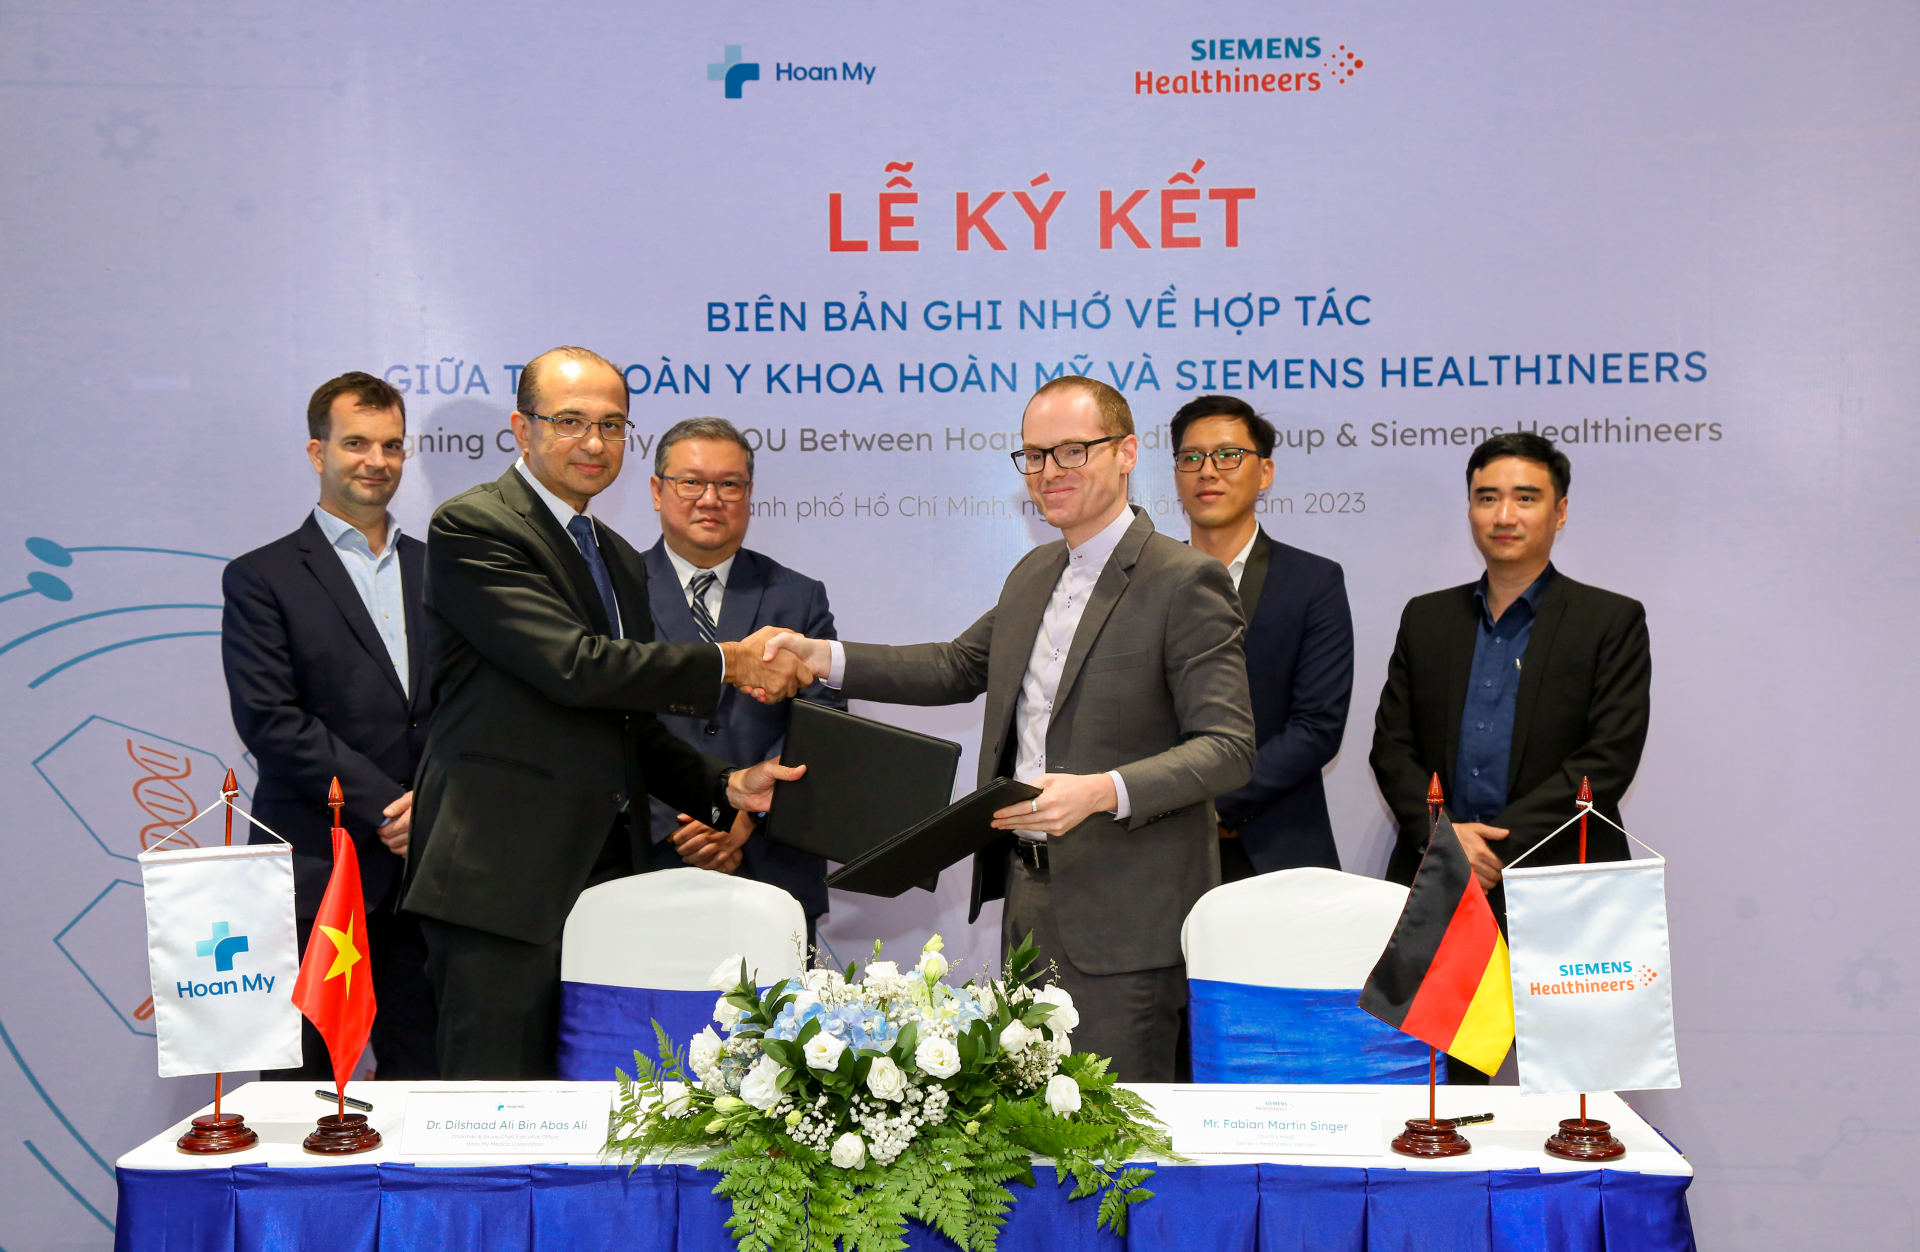 Hoan My Medical Group and Siemens Healthineers enter partnership